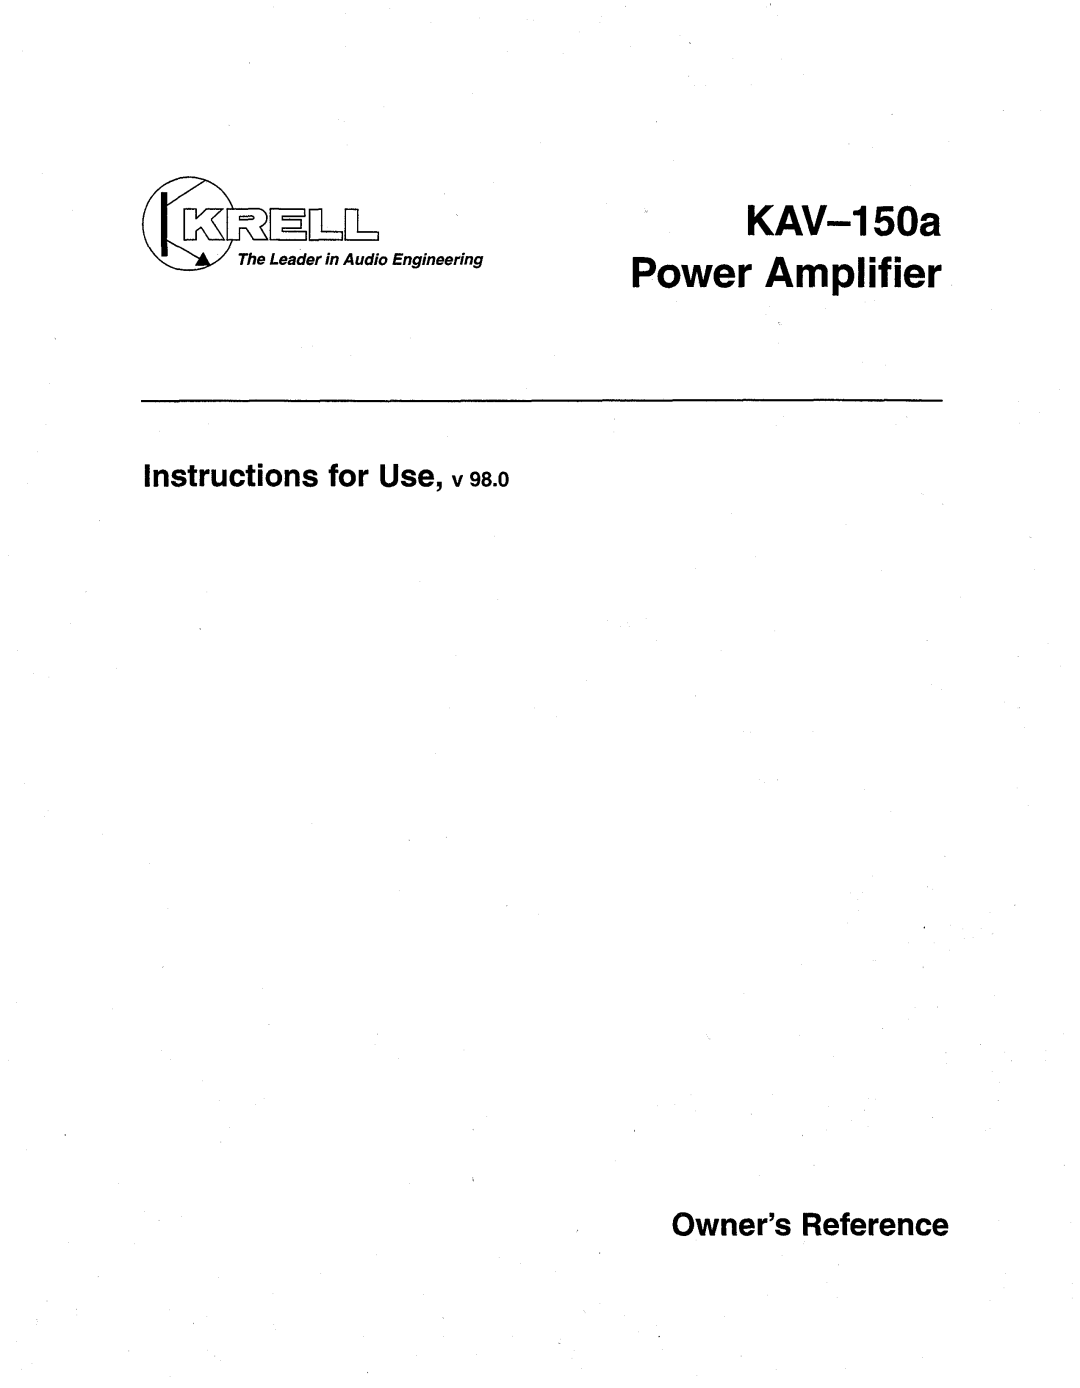 Krell Industries manual KAV-150a PowerAmplifier 